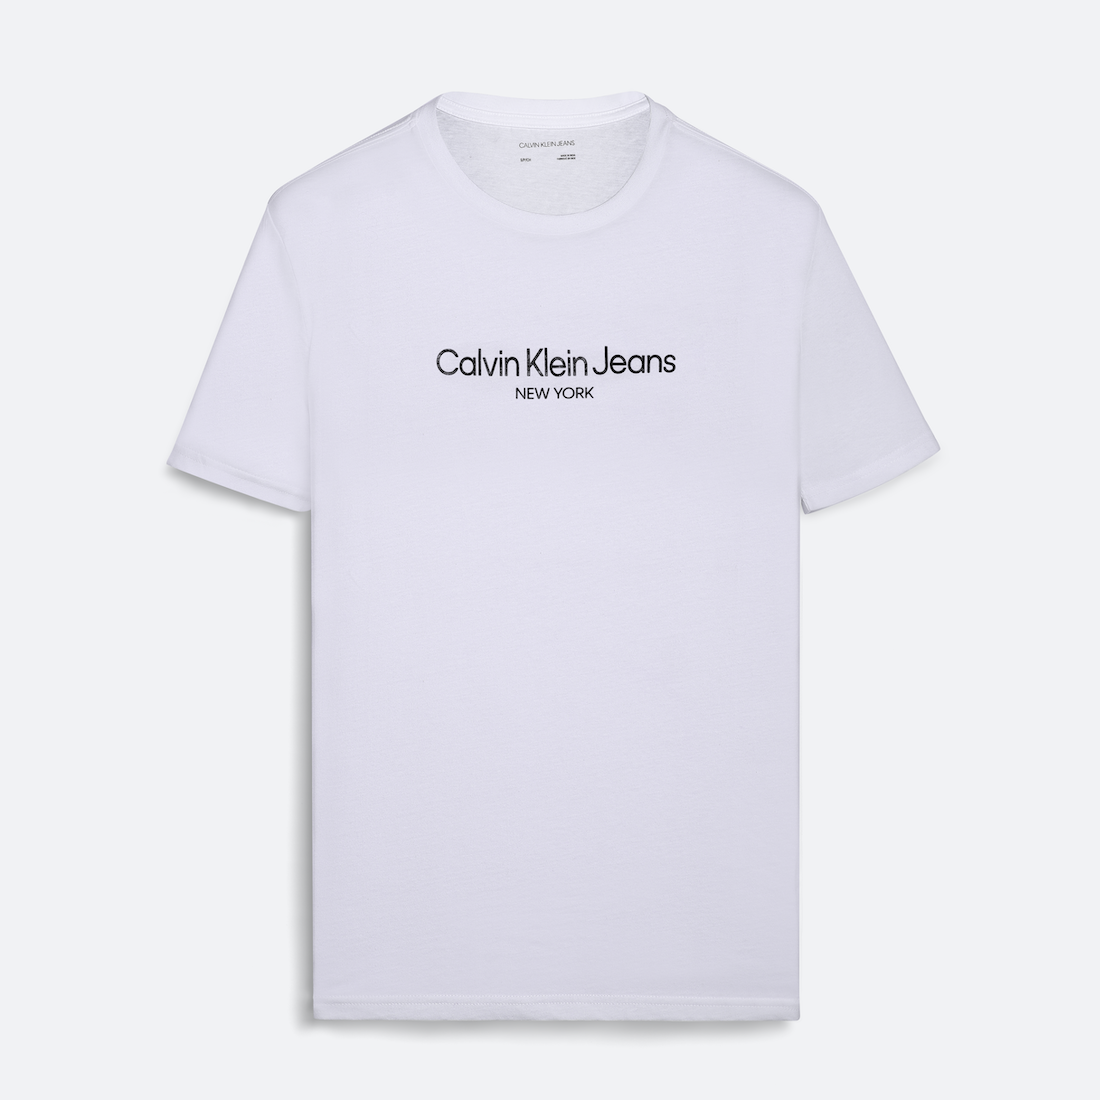 Calvin Klein New-York Edition – Outfits Dealer